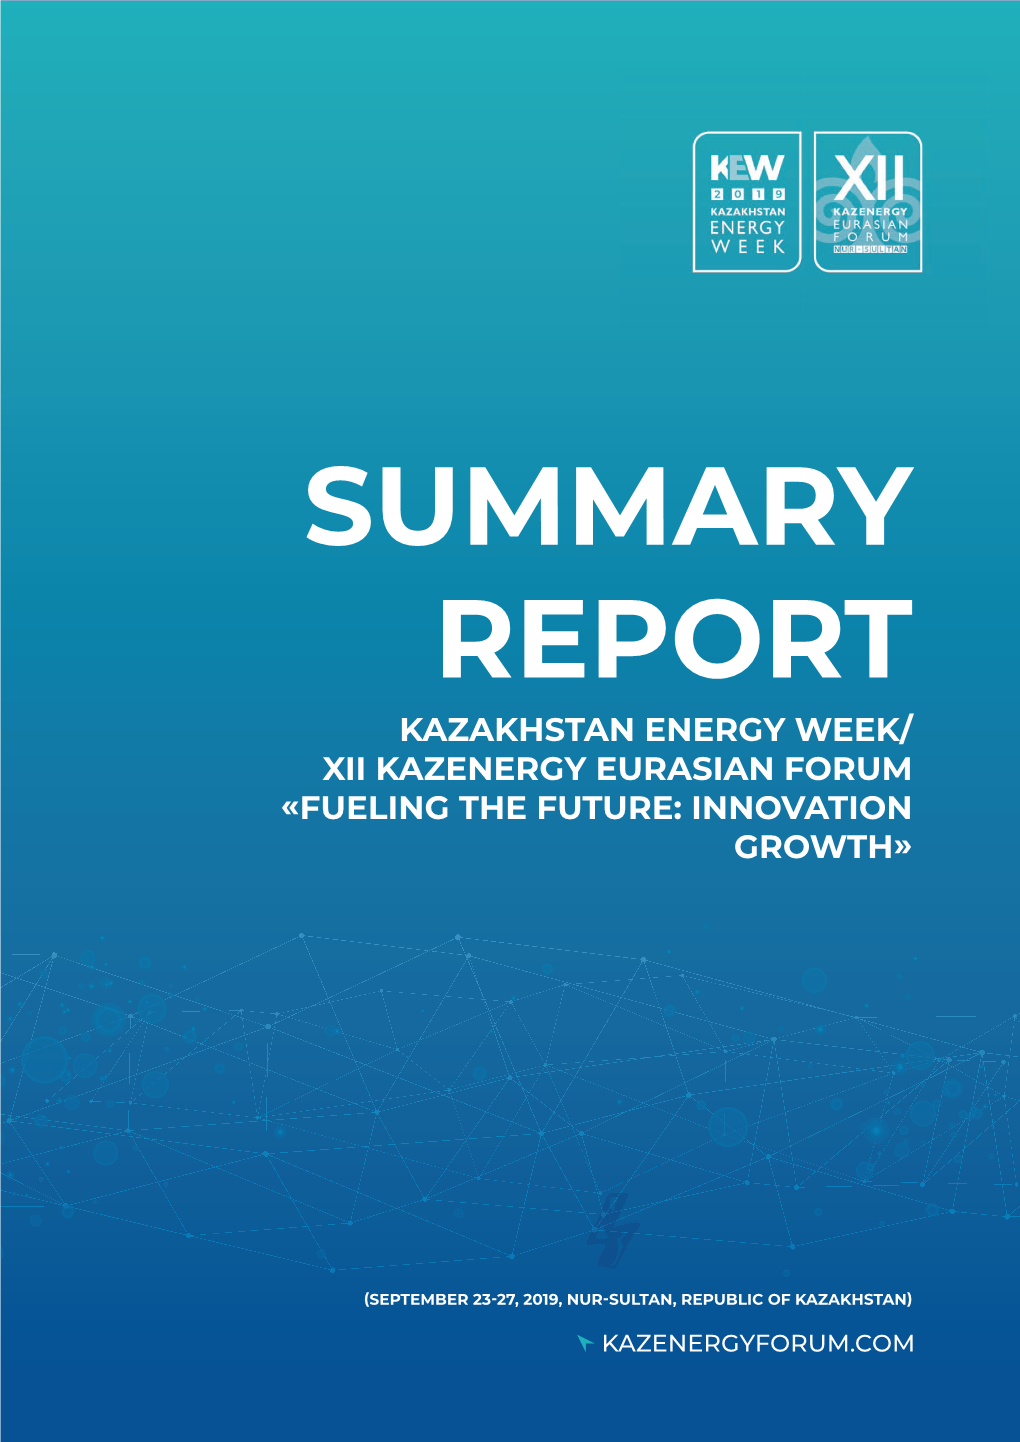 Summary Report Kazakhstan Energy Week Xii Kazenergy Eurasian Forum Fueling the Future: Innovation Growth